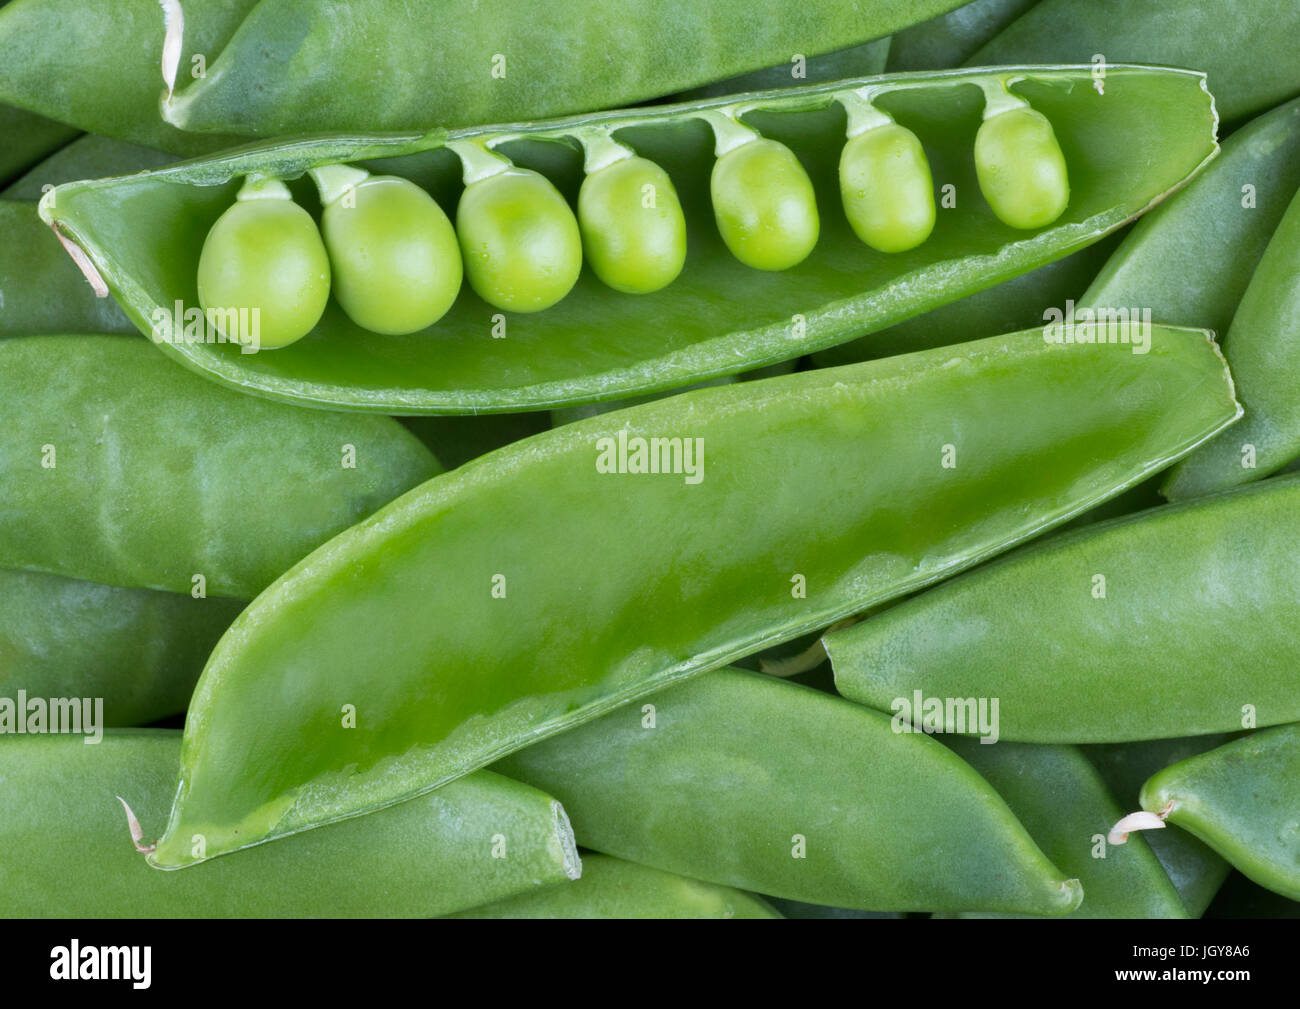 pea pod open revealing the peas inside Stock Photo